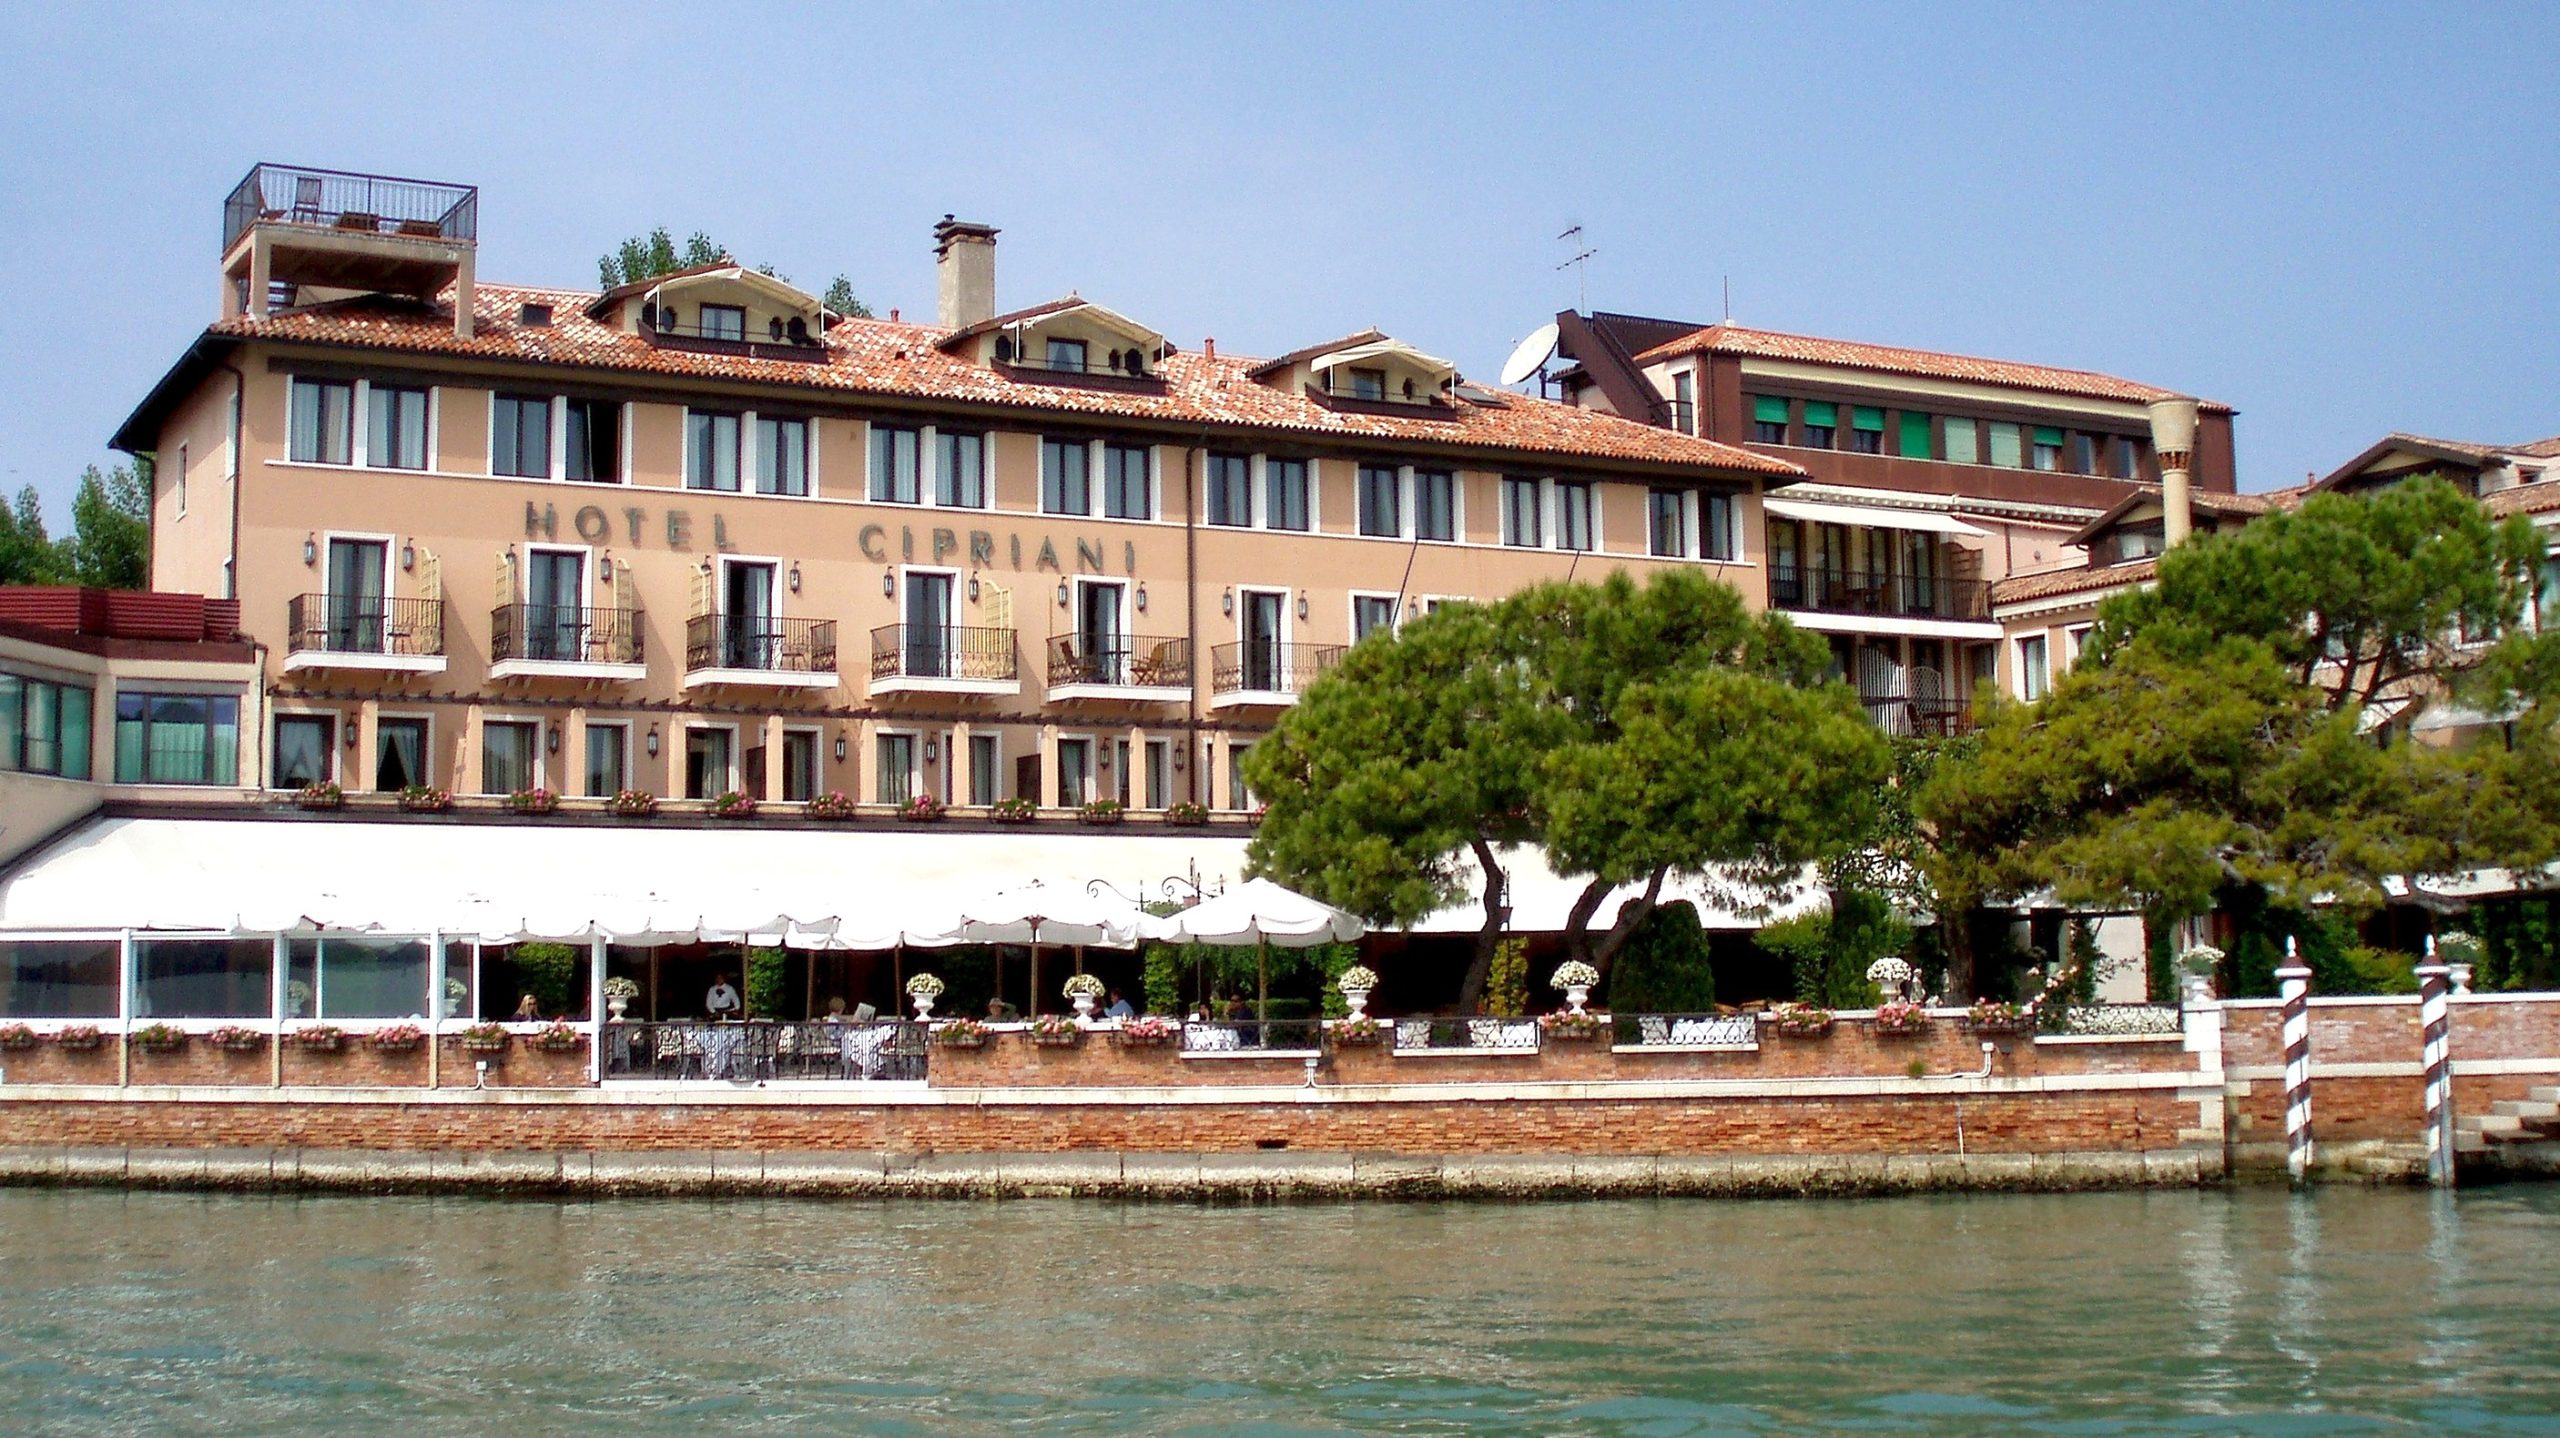 http://www.thedrinksbusiness.com/wordpress/wp-content/uploads/2015/05/Hotel_Cipriani_Venice.jpg